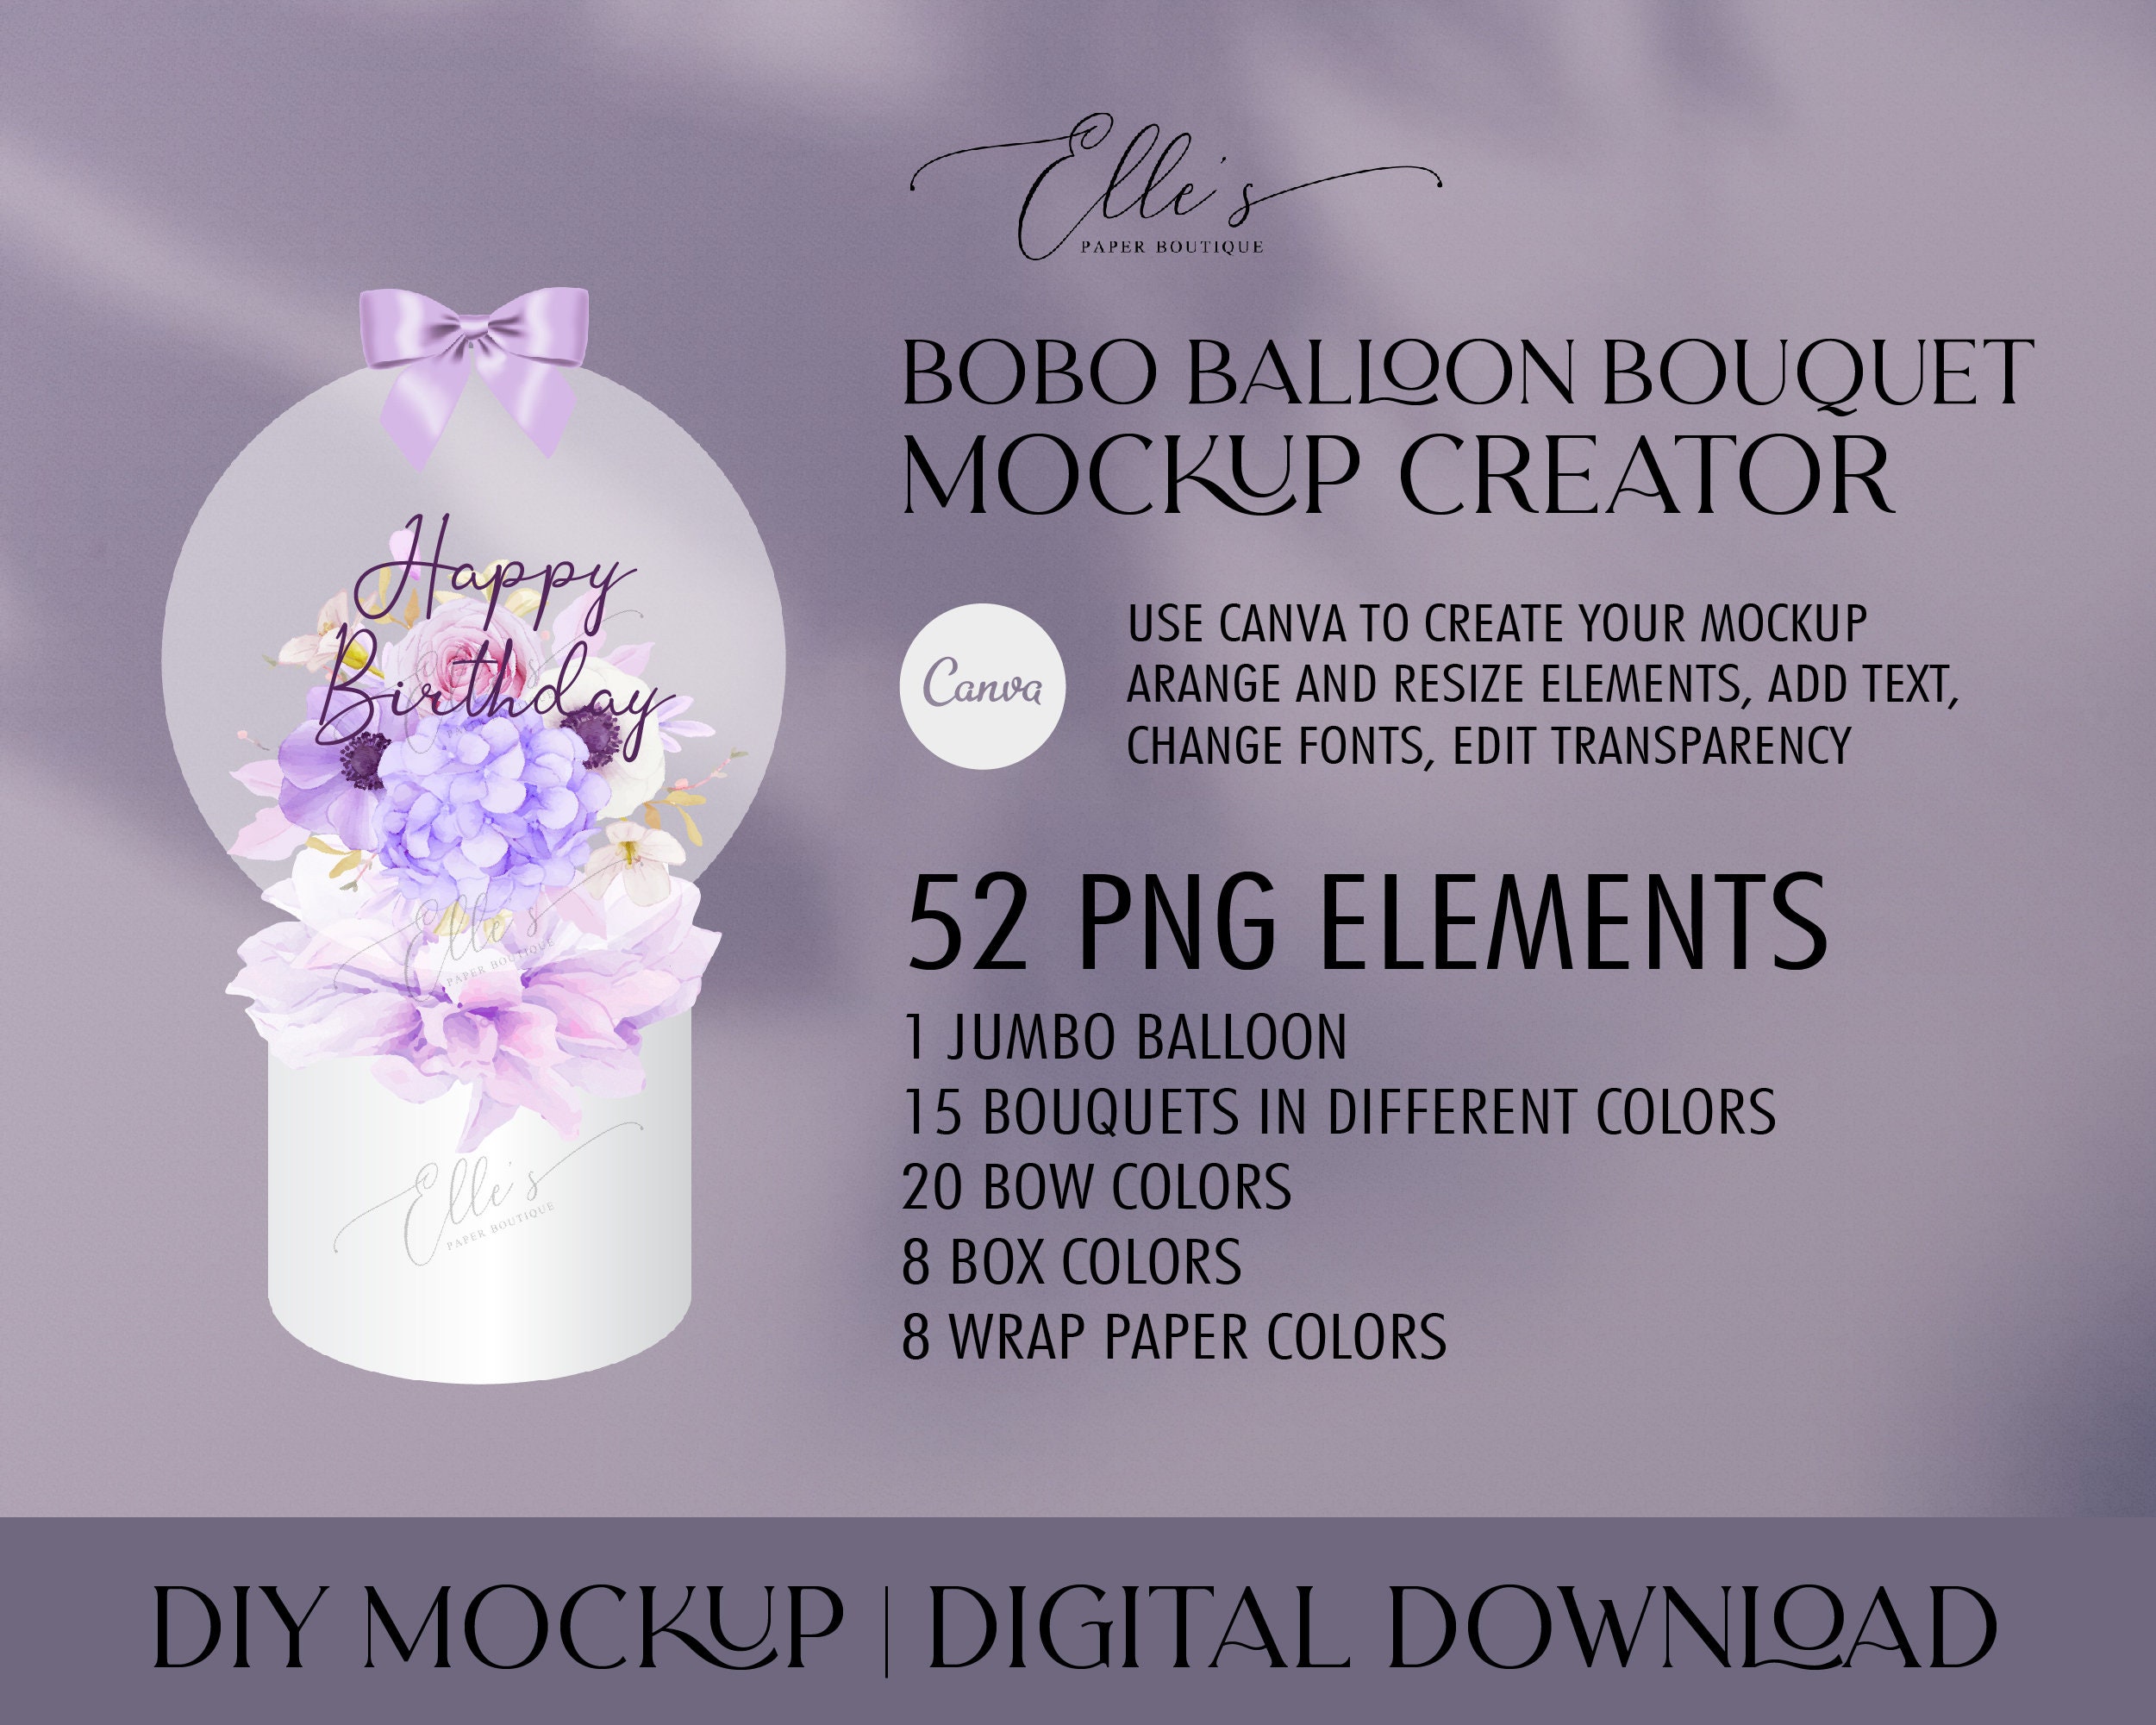 Bobo Balloon Bouquet Mockup Creator, Balloon Mockup Kit, Balloons Bundle  Canva, Flower Bouquet in Balloon, PNG Cliparts, DIGITAL Files, DIY 